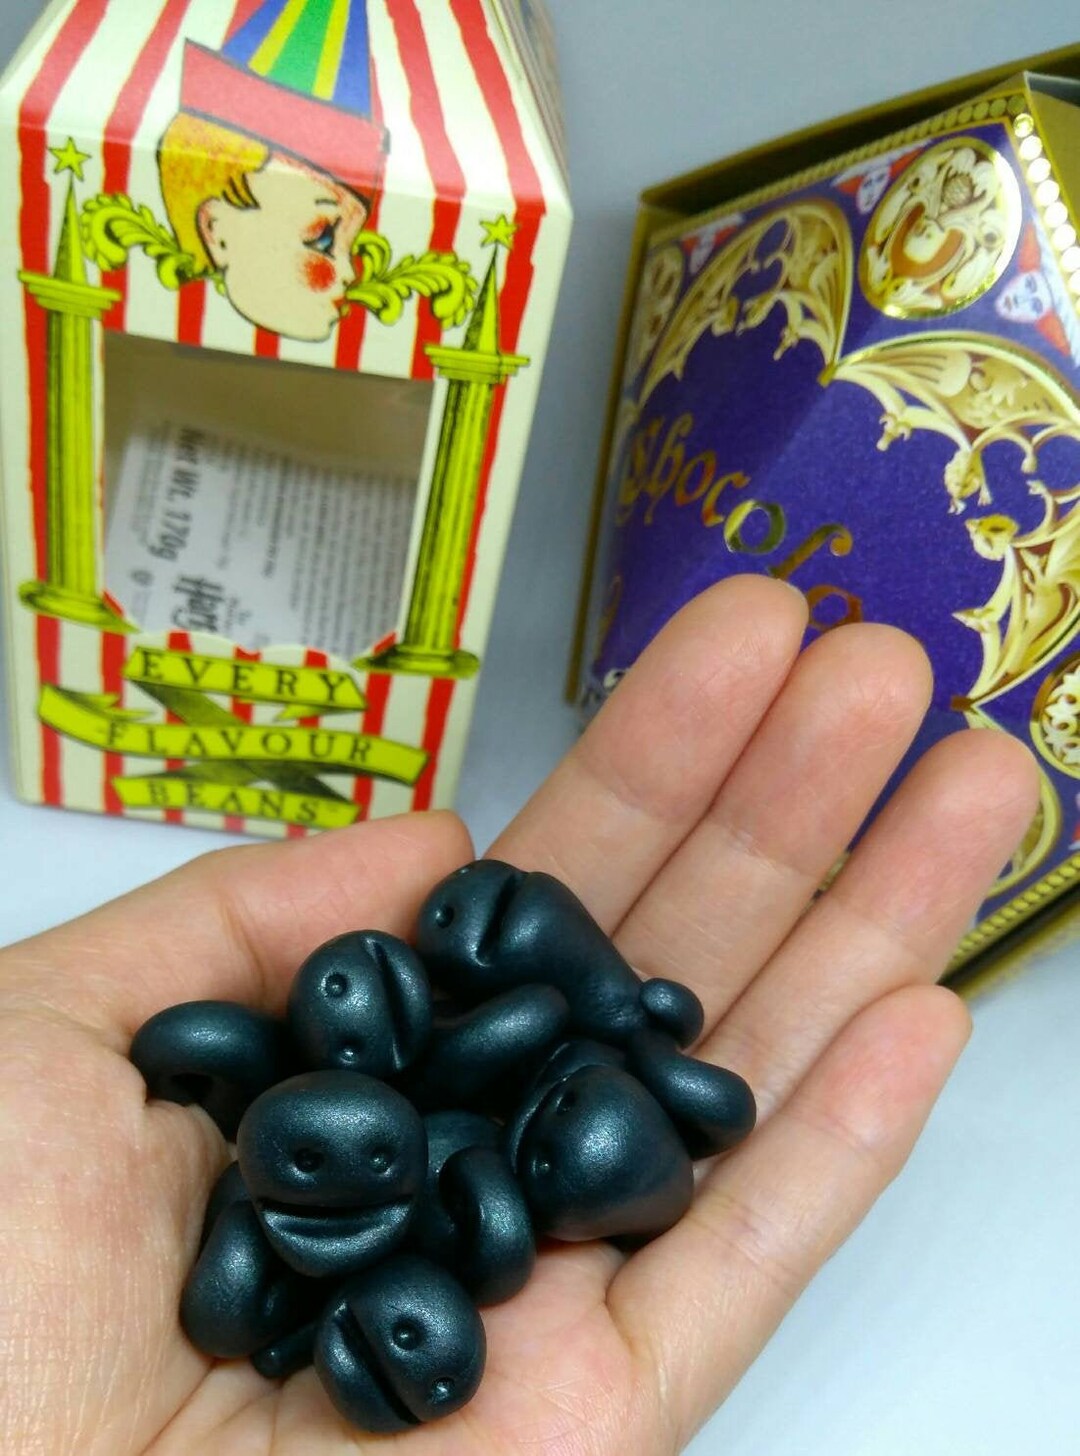 Potter's Original Licorice - Candy Blog